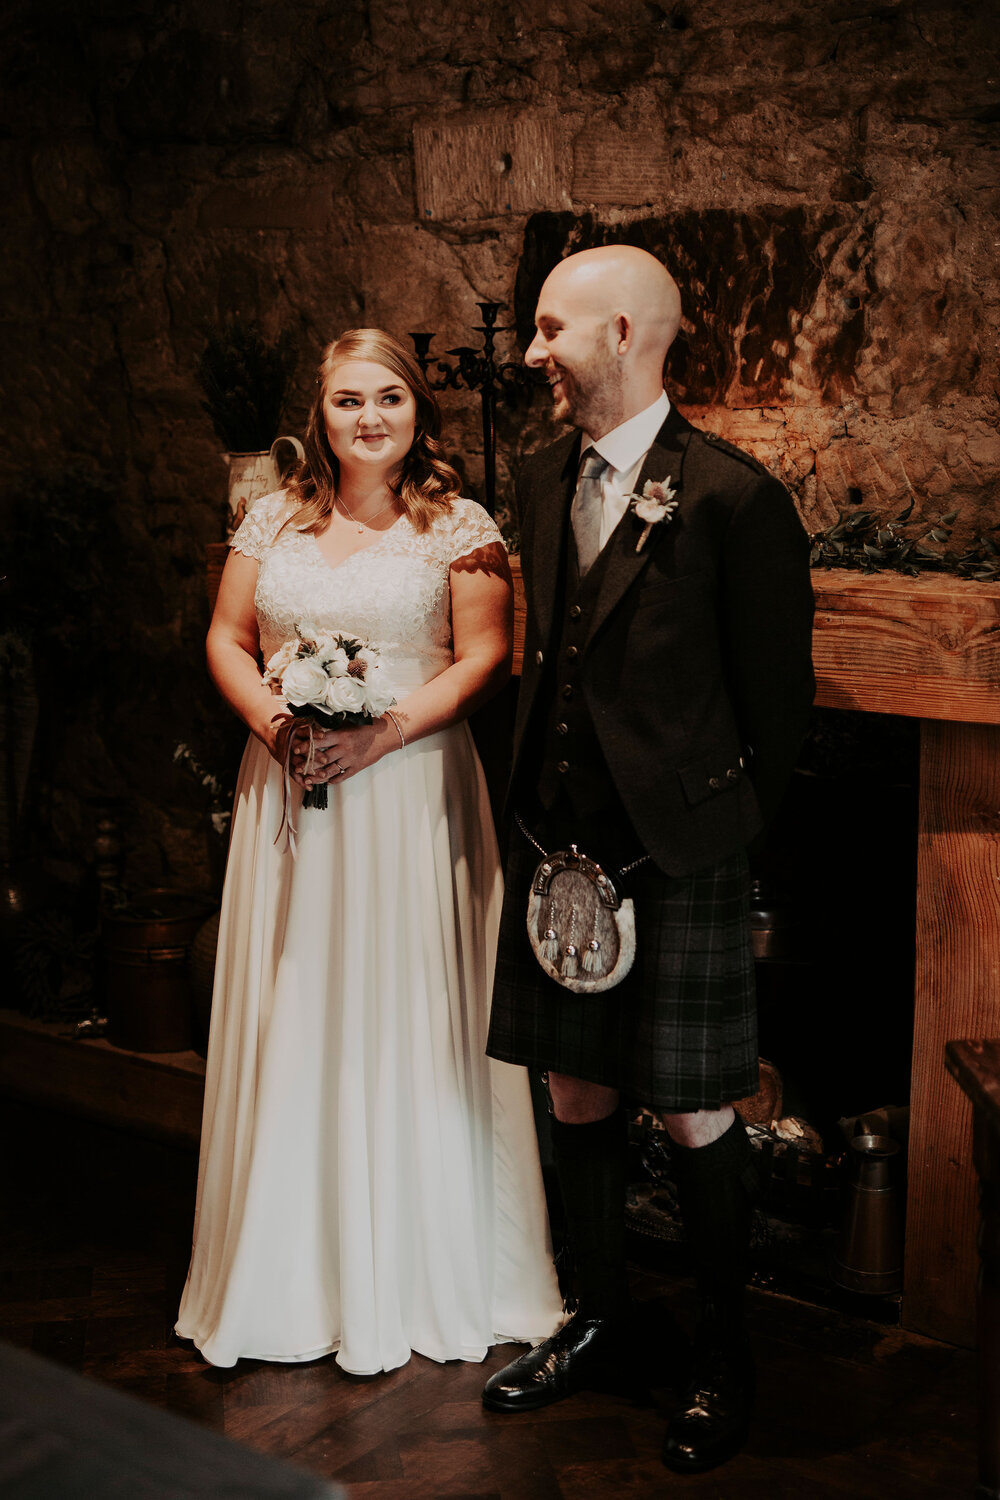  Glasgow wedding photographer hourly rate 